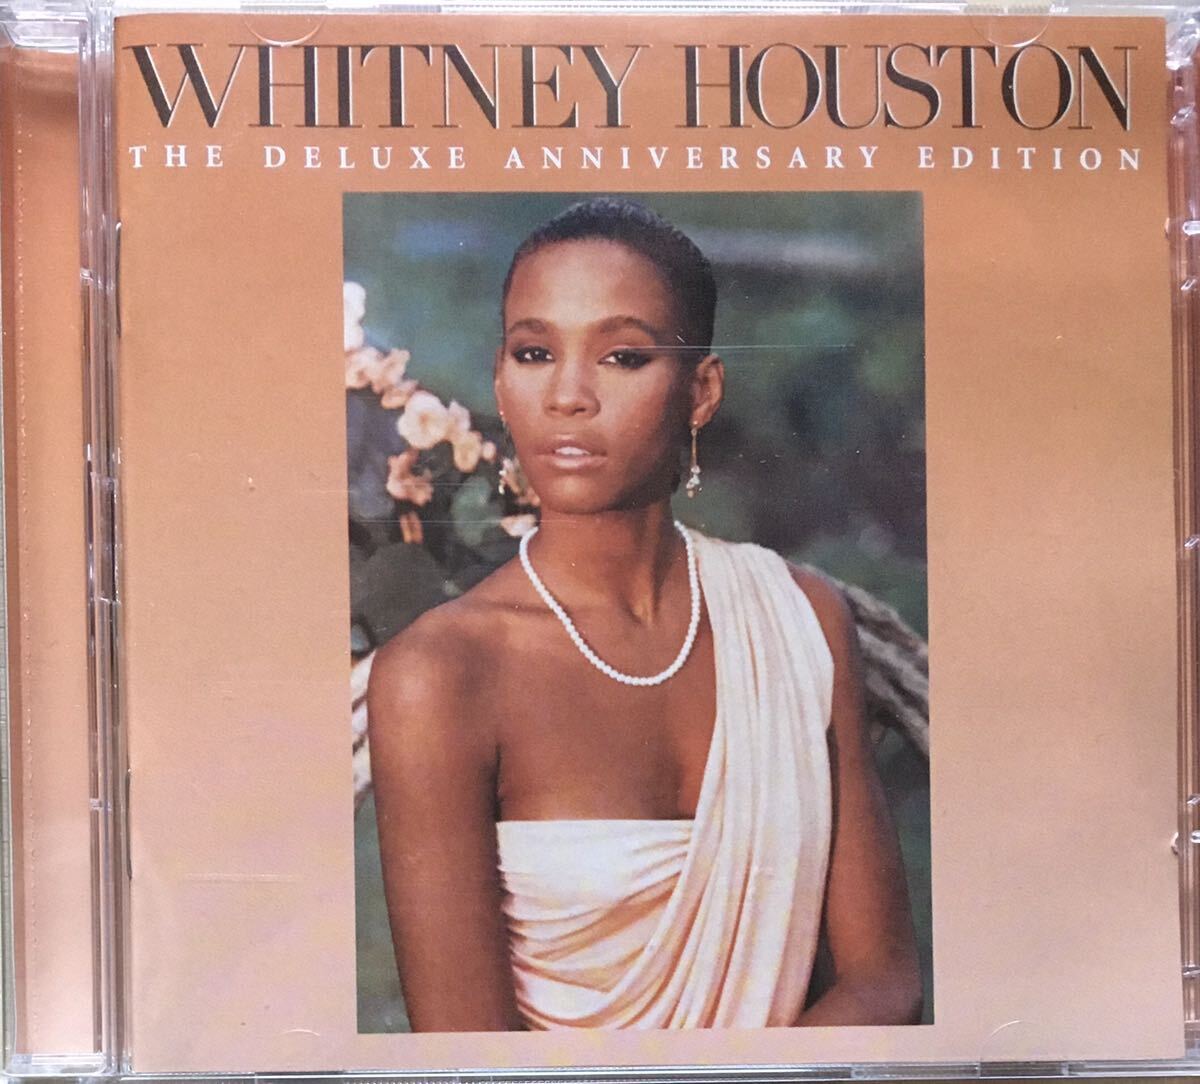 Whitney Houston[WHITNEY HOUSTON THE DELUXE ANNIVERSARY EDITION](CD+DVD)Jermaine Jackson/Roy Ayers/Teddy Pendergrass/Richard Marxの画像3